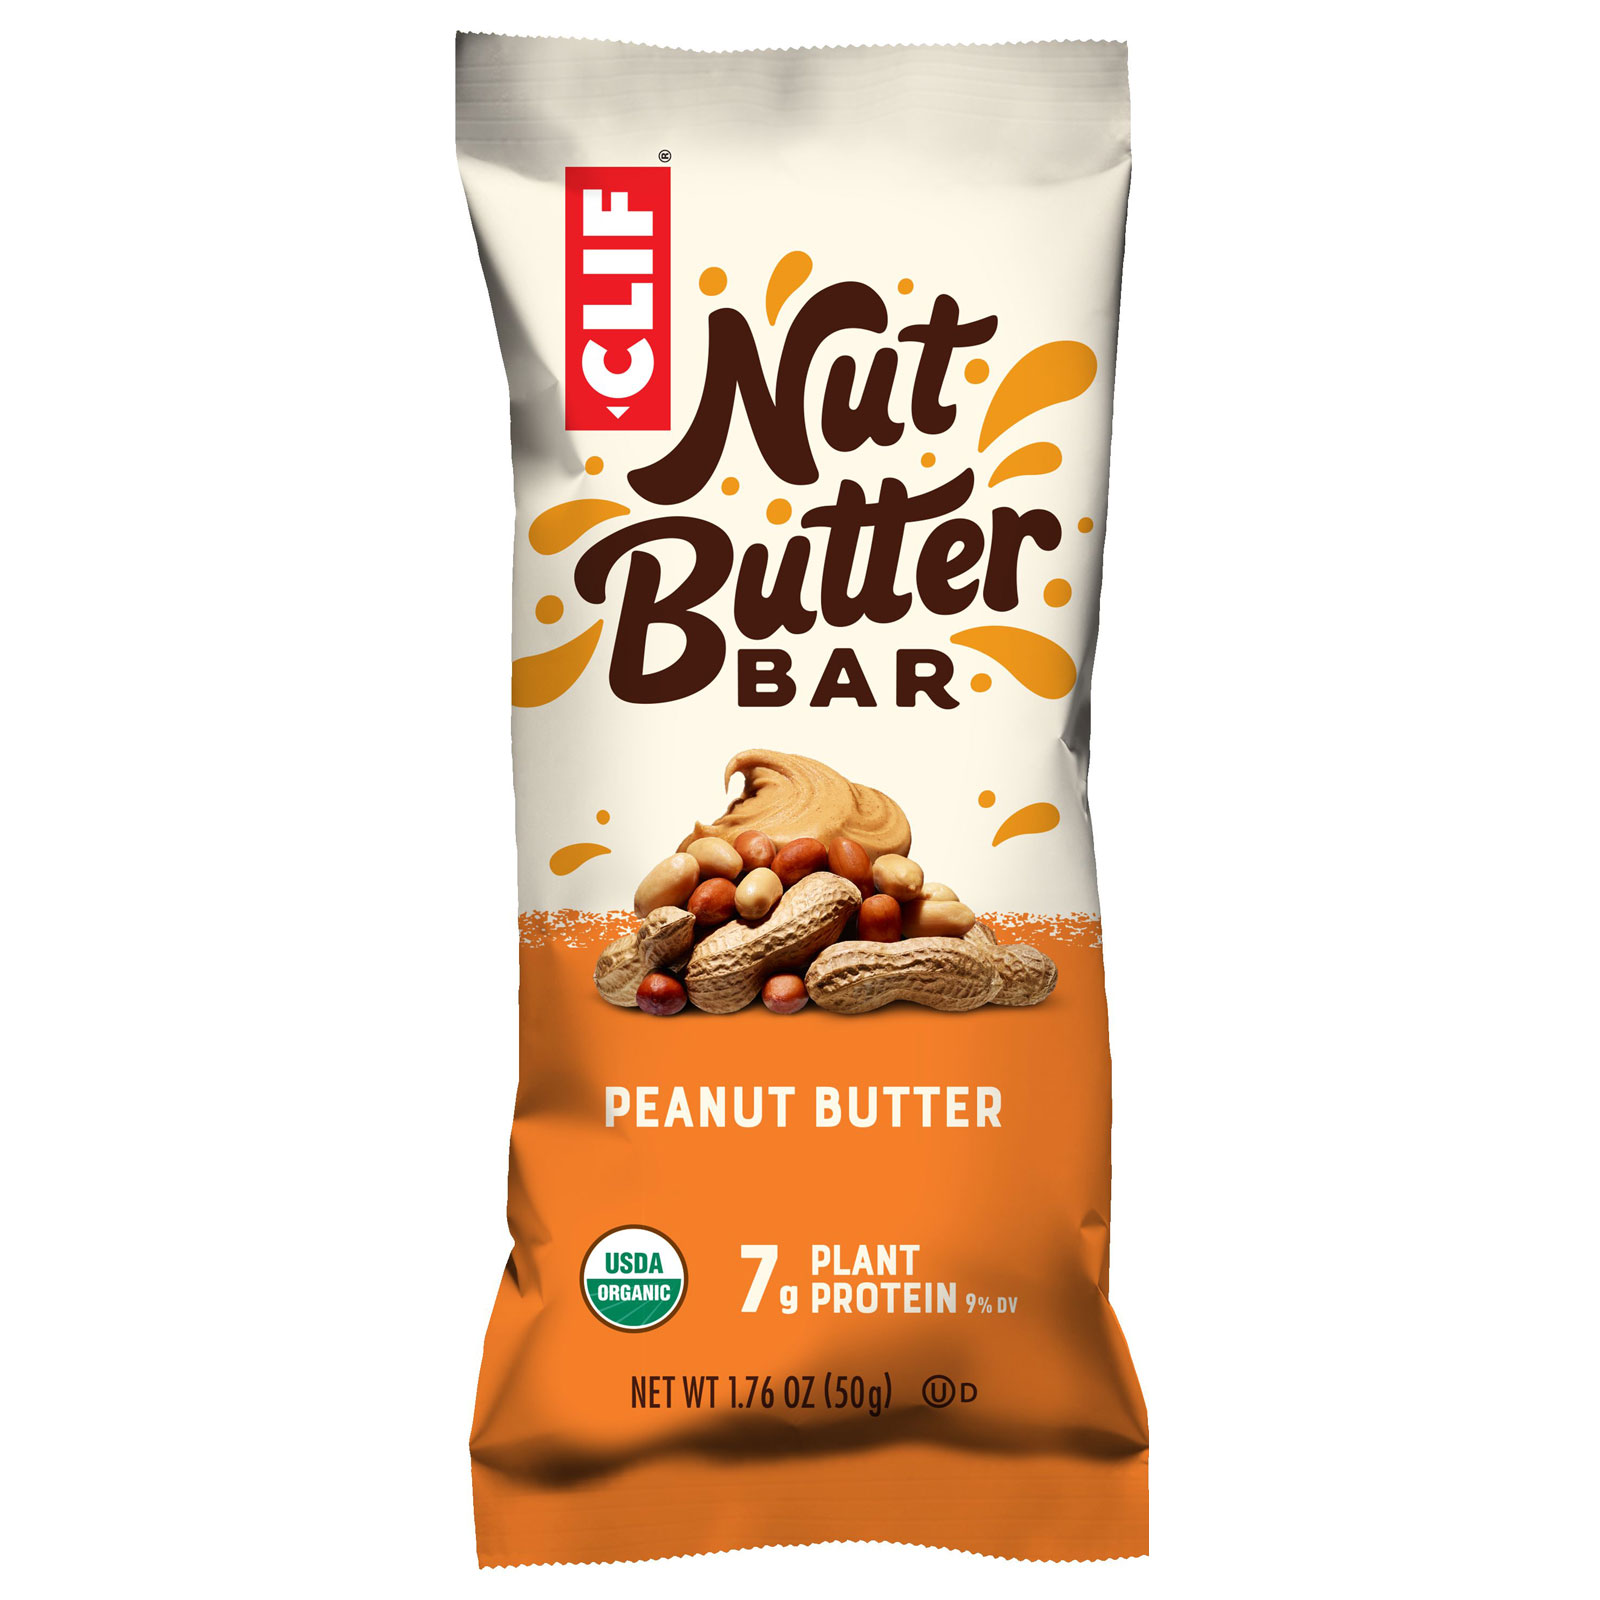 Energy Bar Clif Nut- energy bar - clif bar - CLIF GREECE BAR - nut bar - energy bar Nut Peanut Butter running - Chocolate organic snack bar